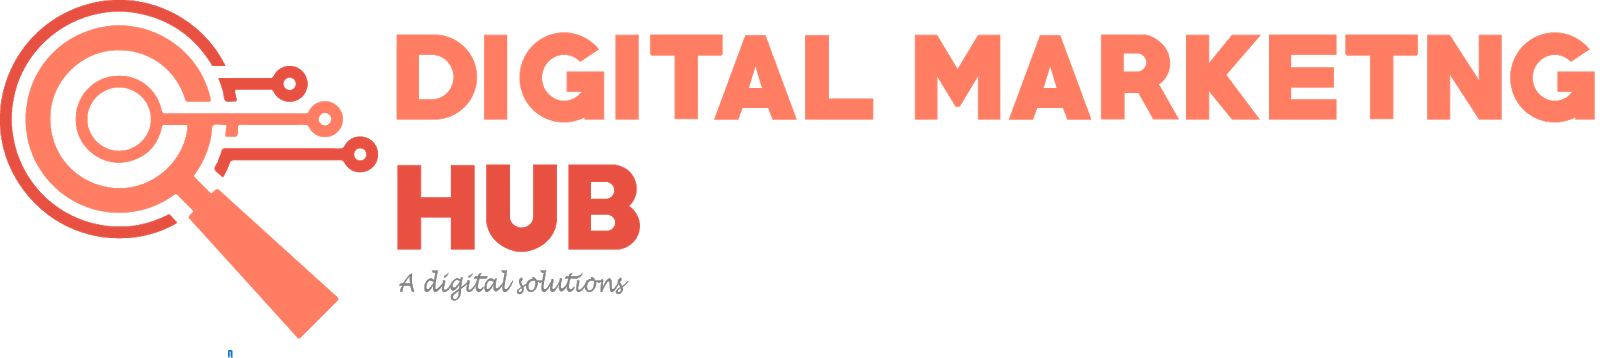 Digital Marketing Hub is top Digital Marketig Agency of Ultimate SEO 